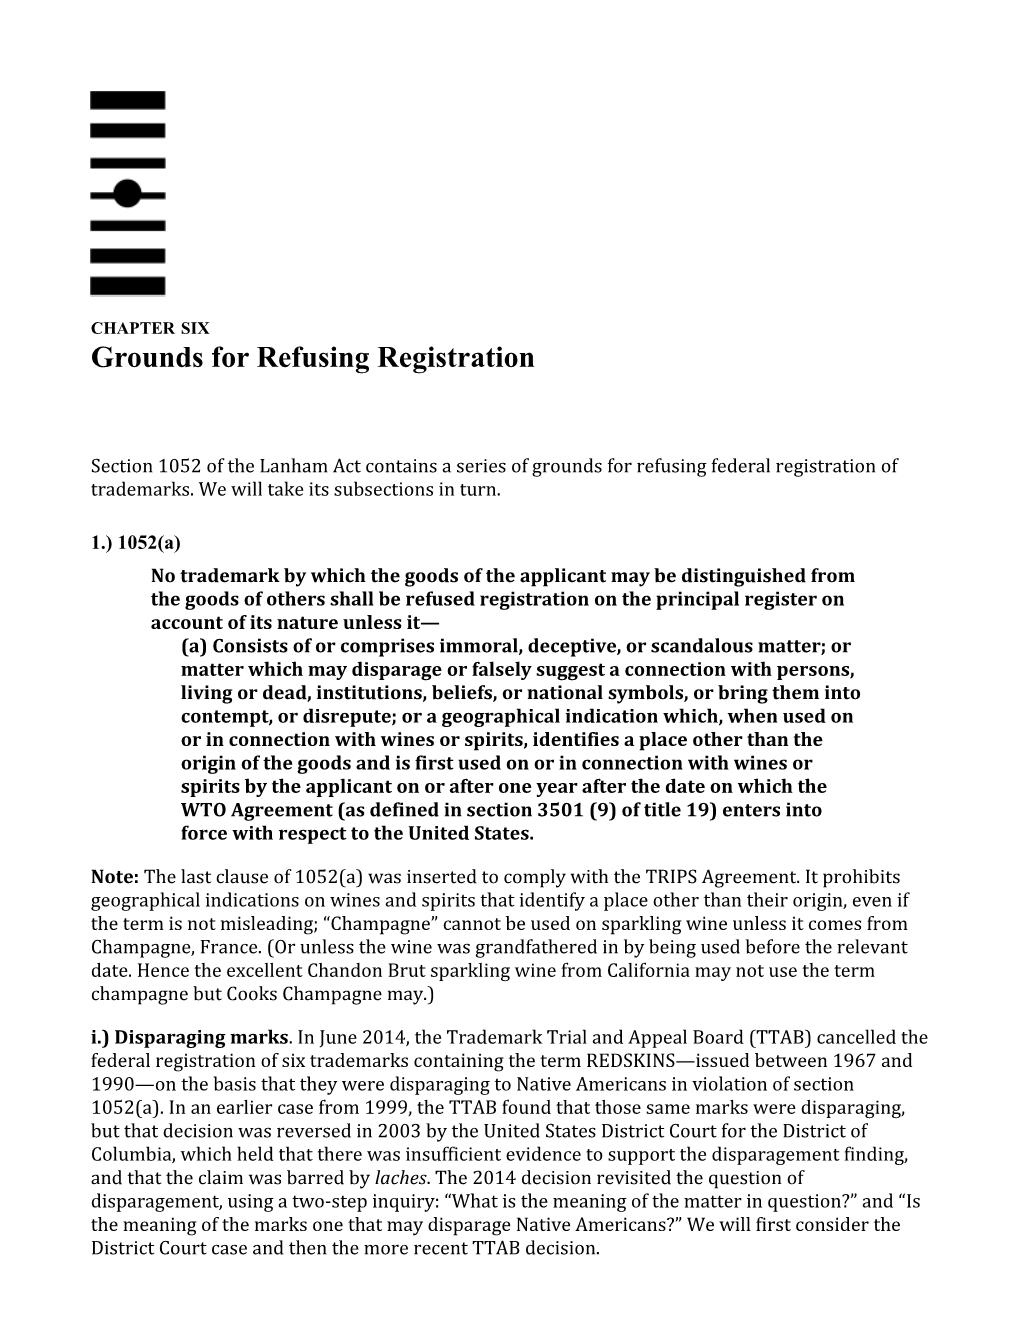 Grounds for Refusing Registration